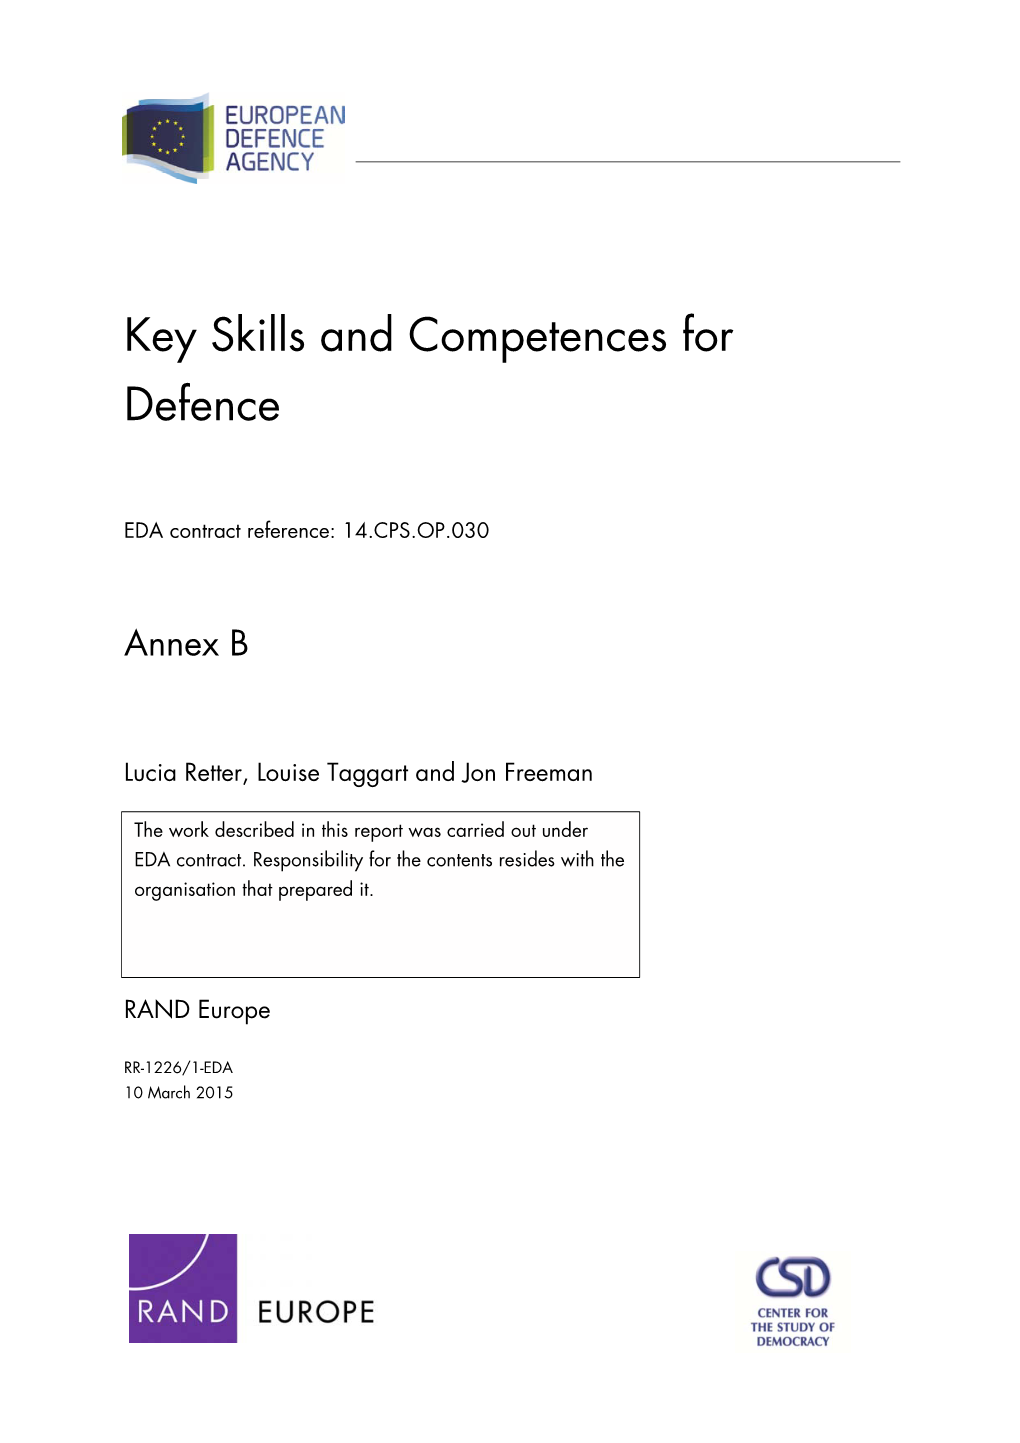 Key Skills and Competences Study: Annex B RR